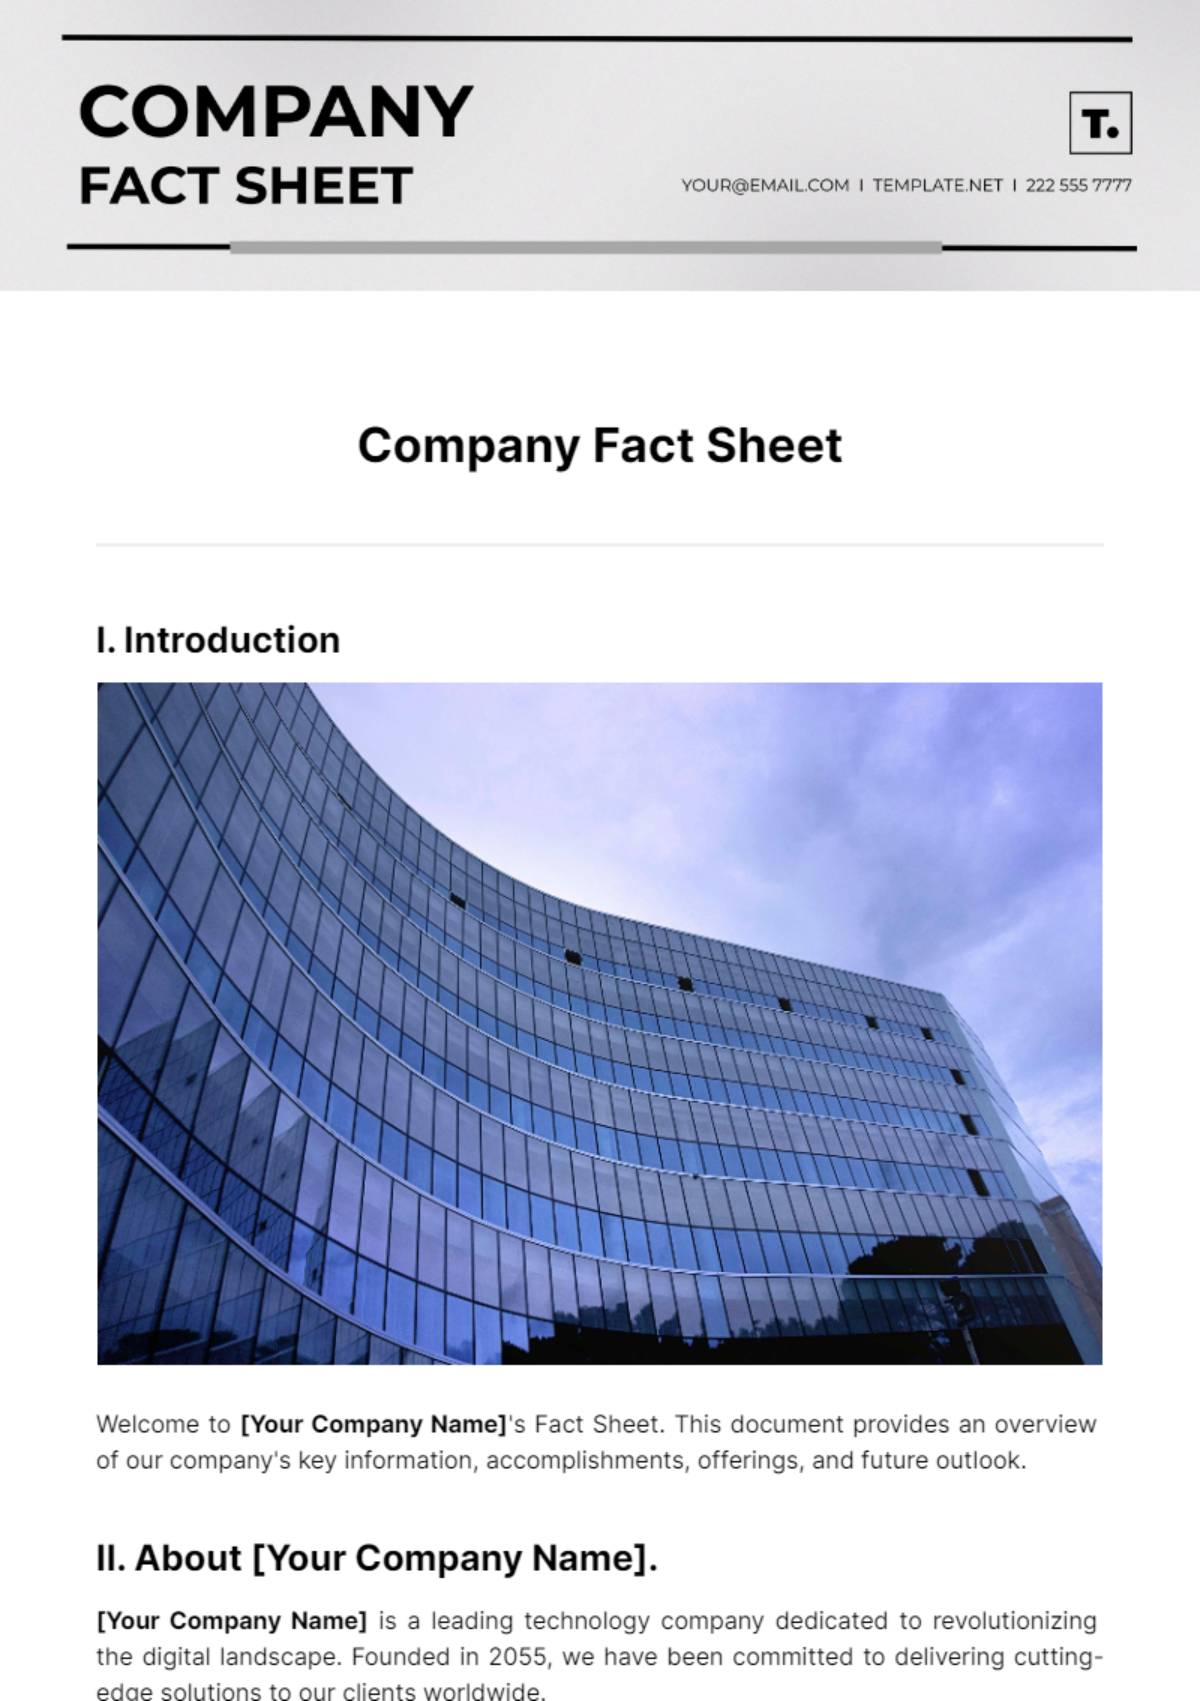 Company Fact Sheet Template